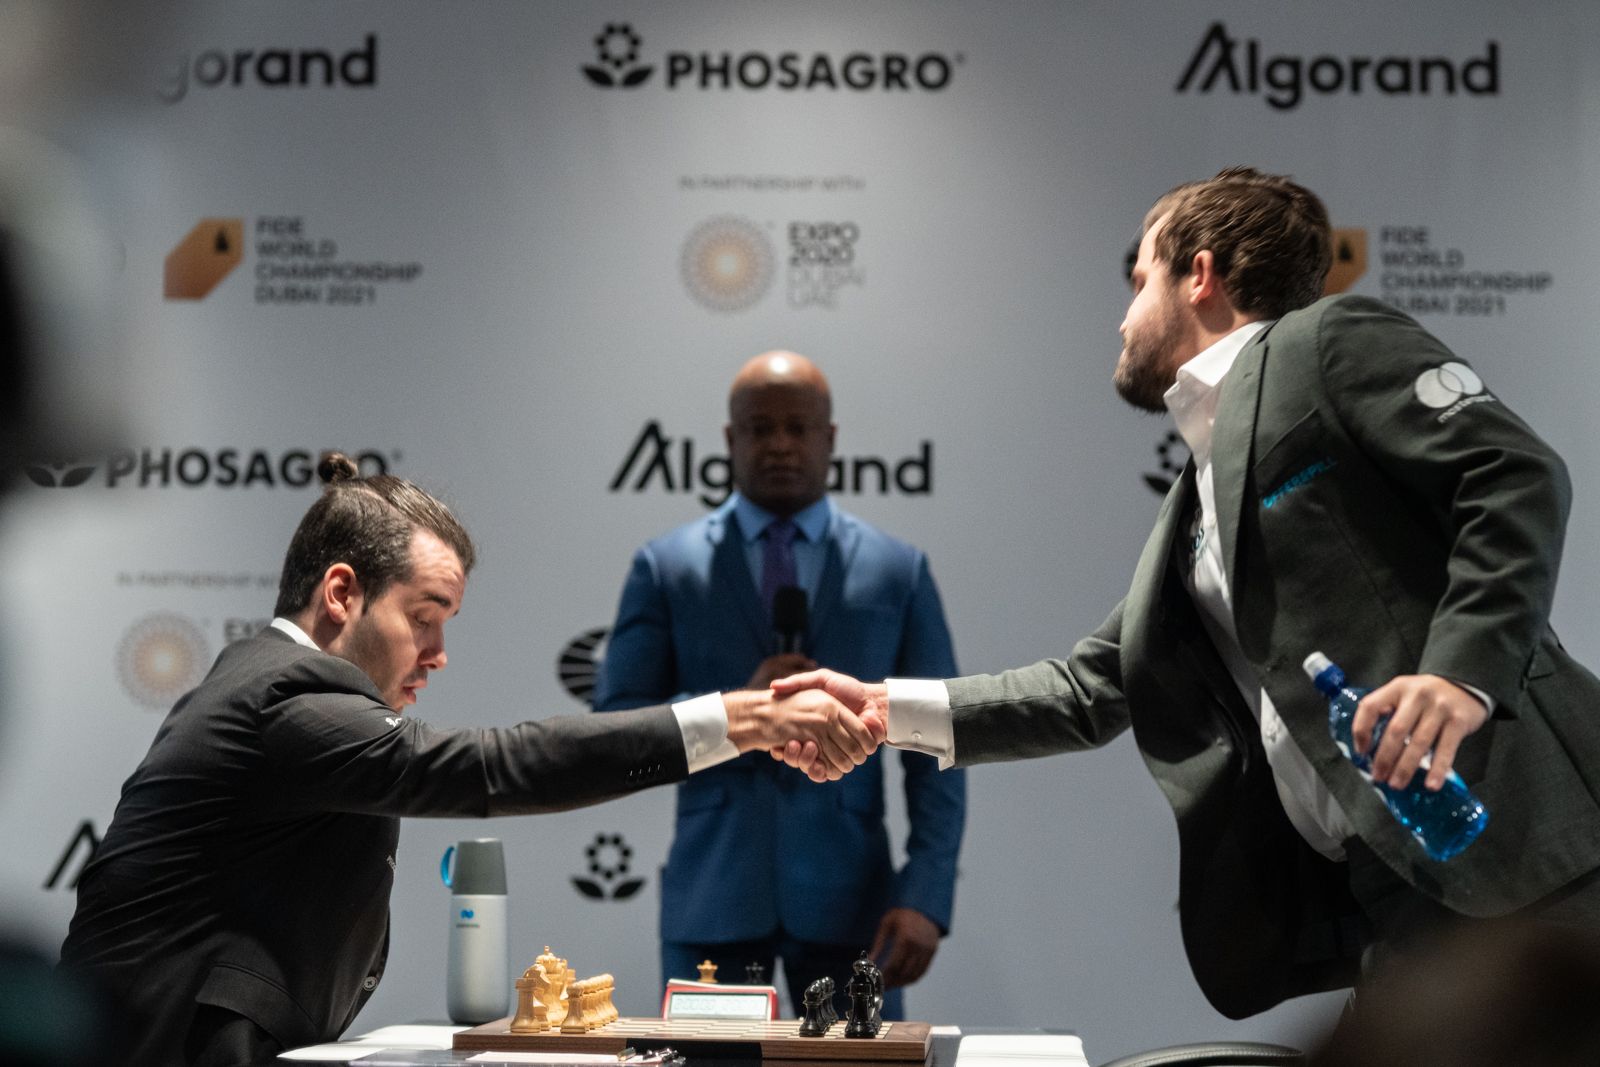 Post-game Thread - 2021 World Chess Championship, Game 7 : r/chess